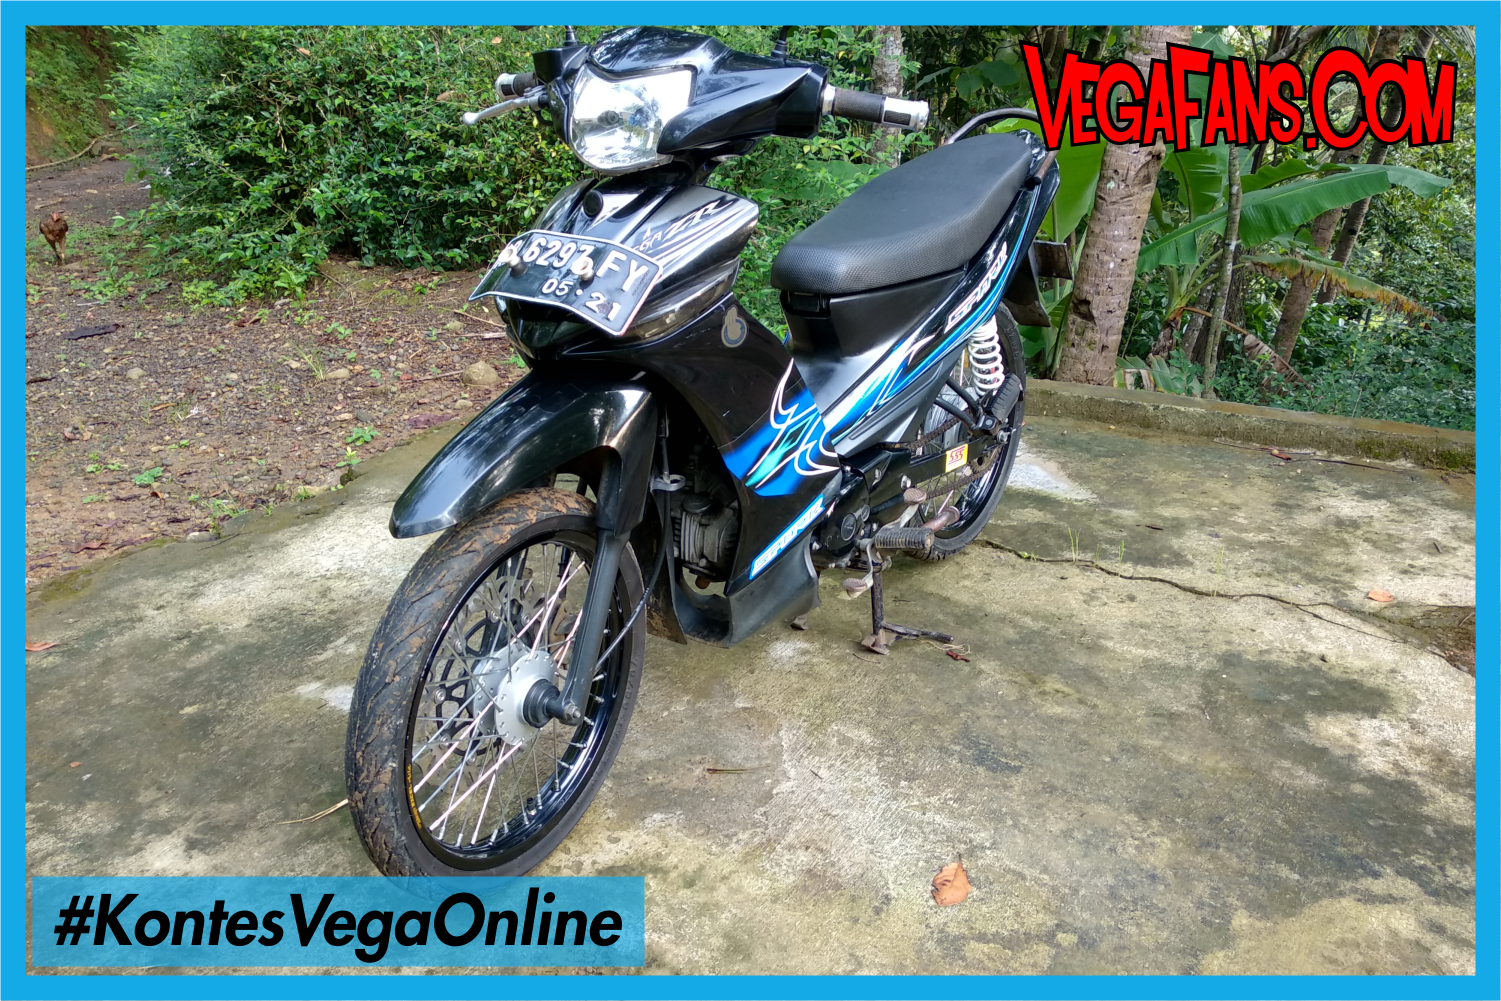 Vega ZR Admin Masih Standart KontesVegaOnline VegaFans com